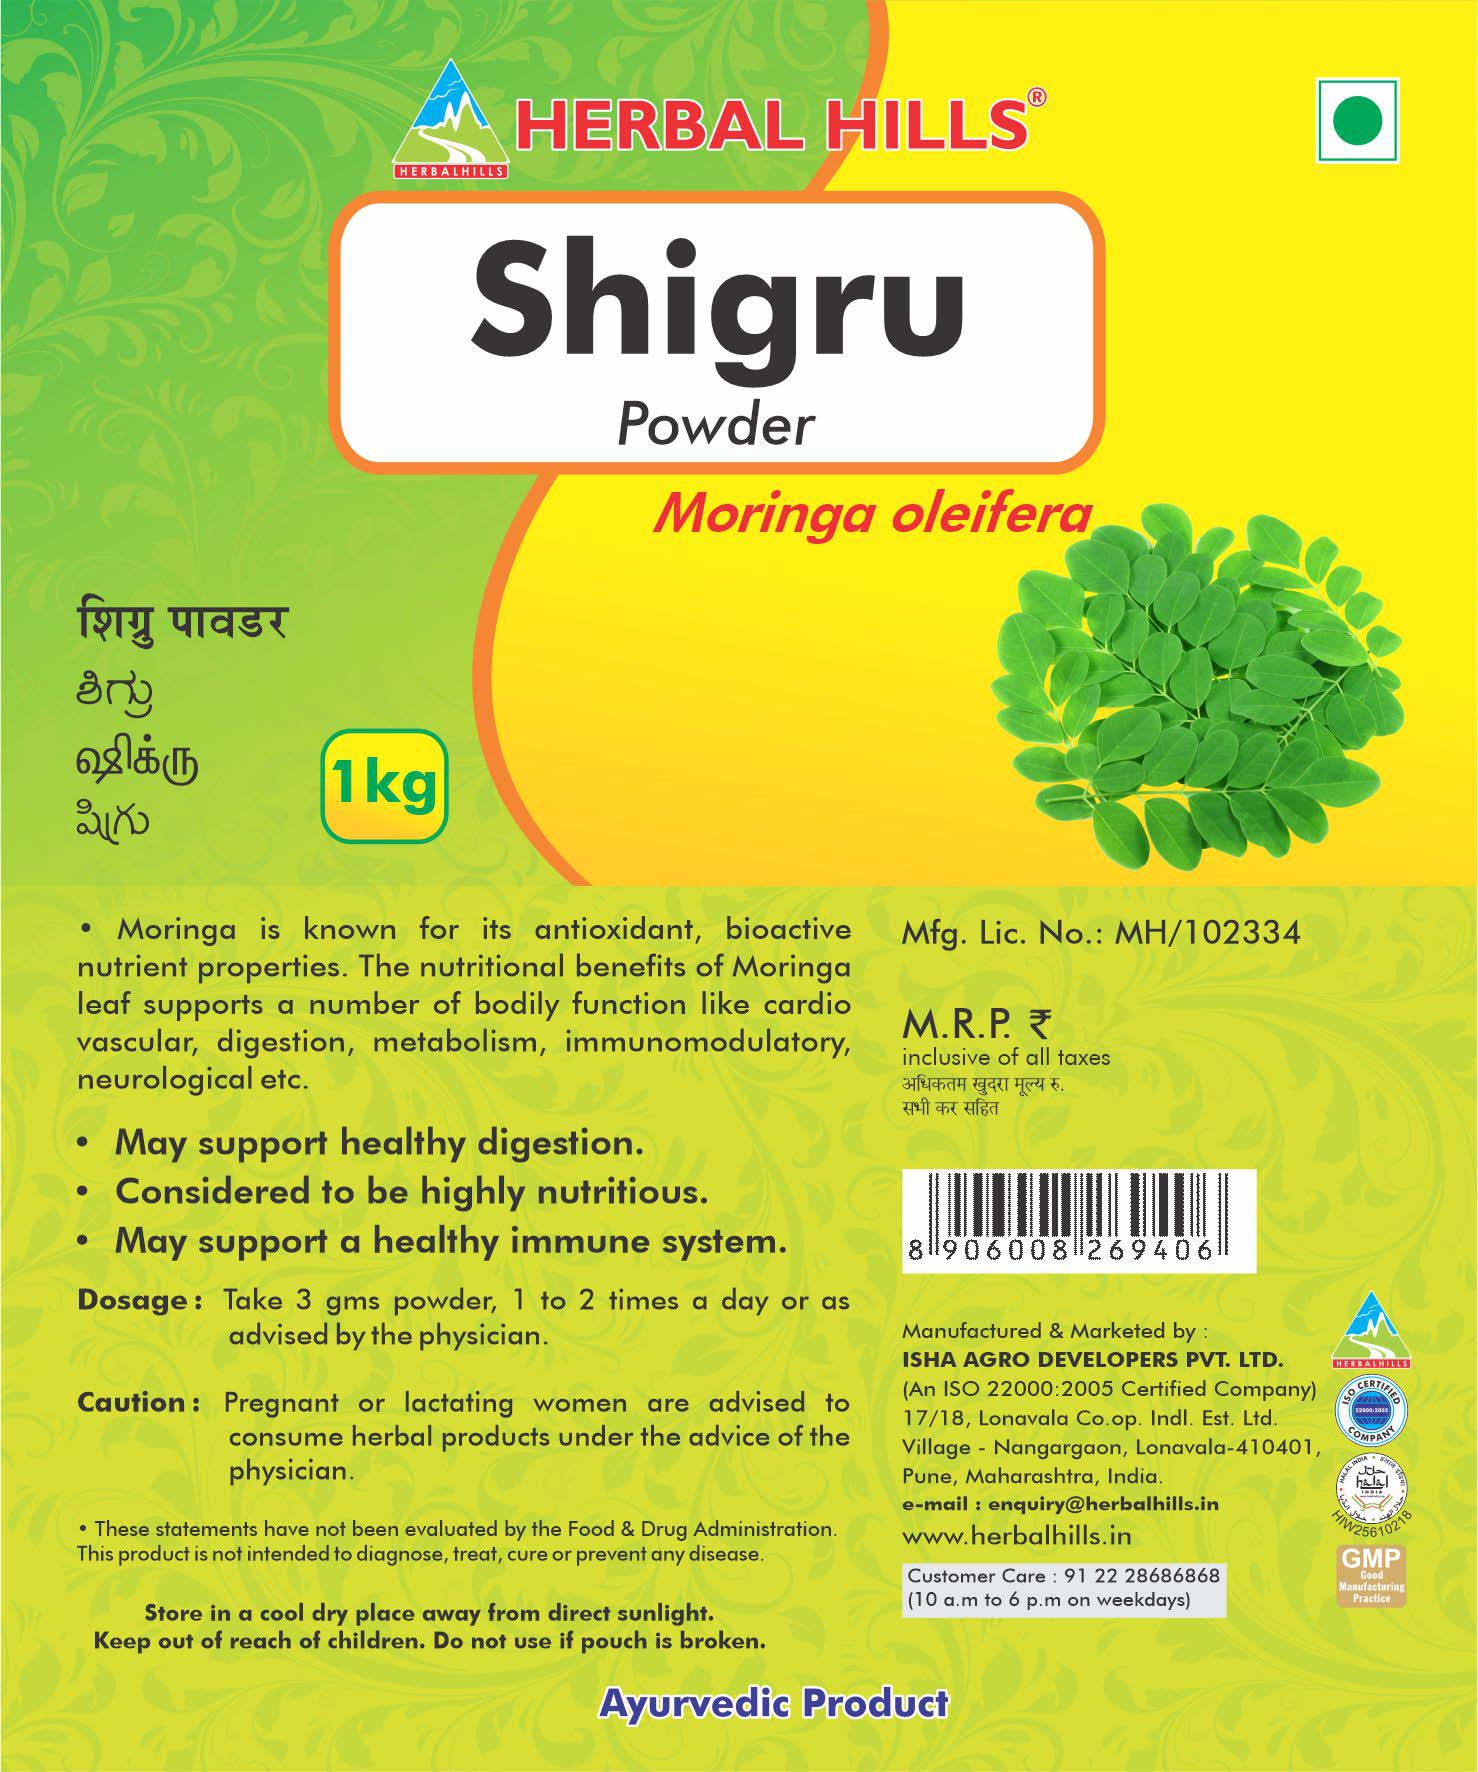 Buy Herbal Hills Shigru Powder at Best Price Online